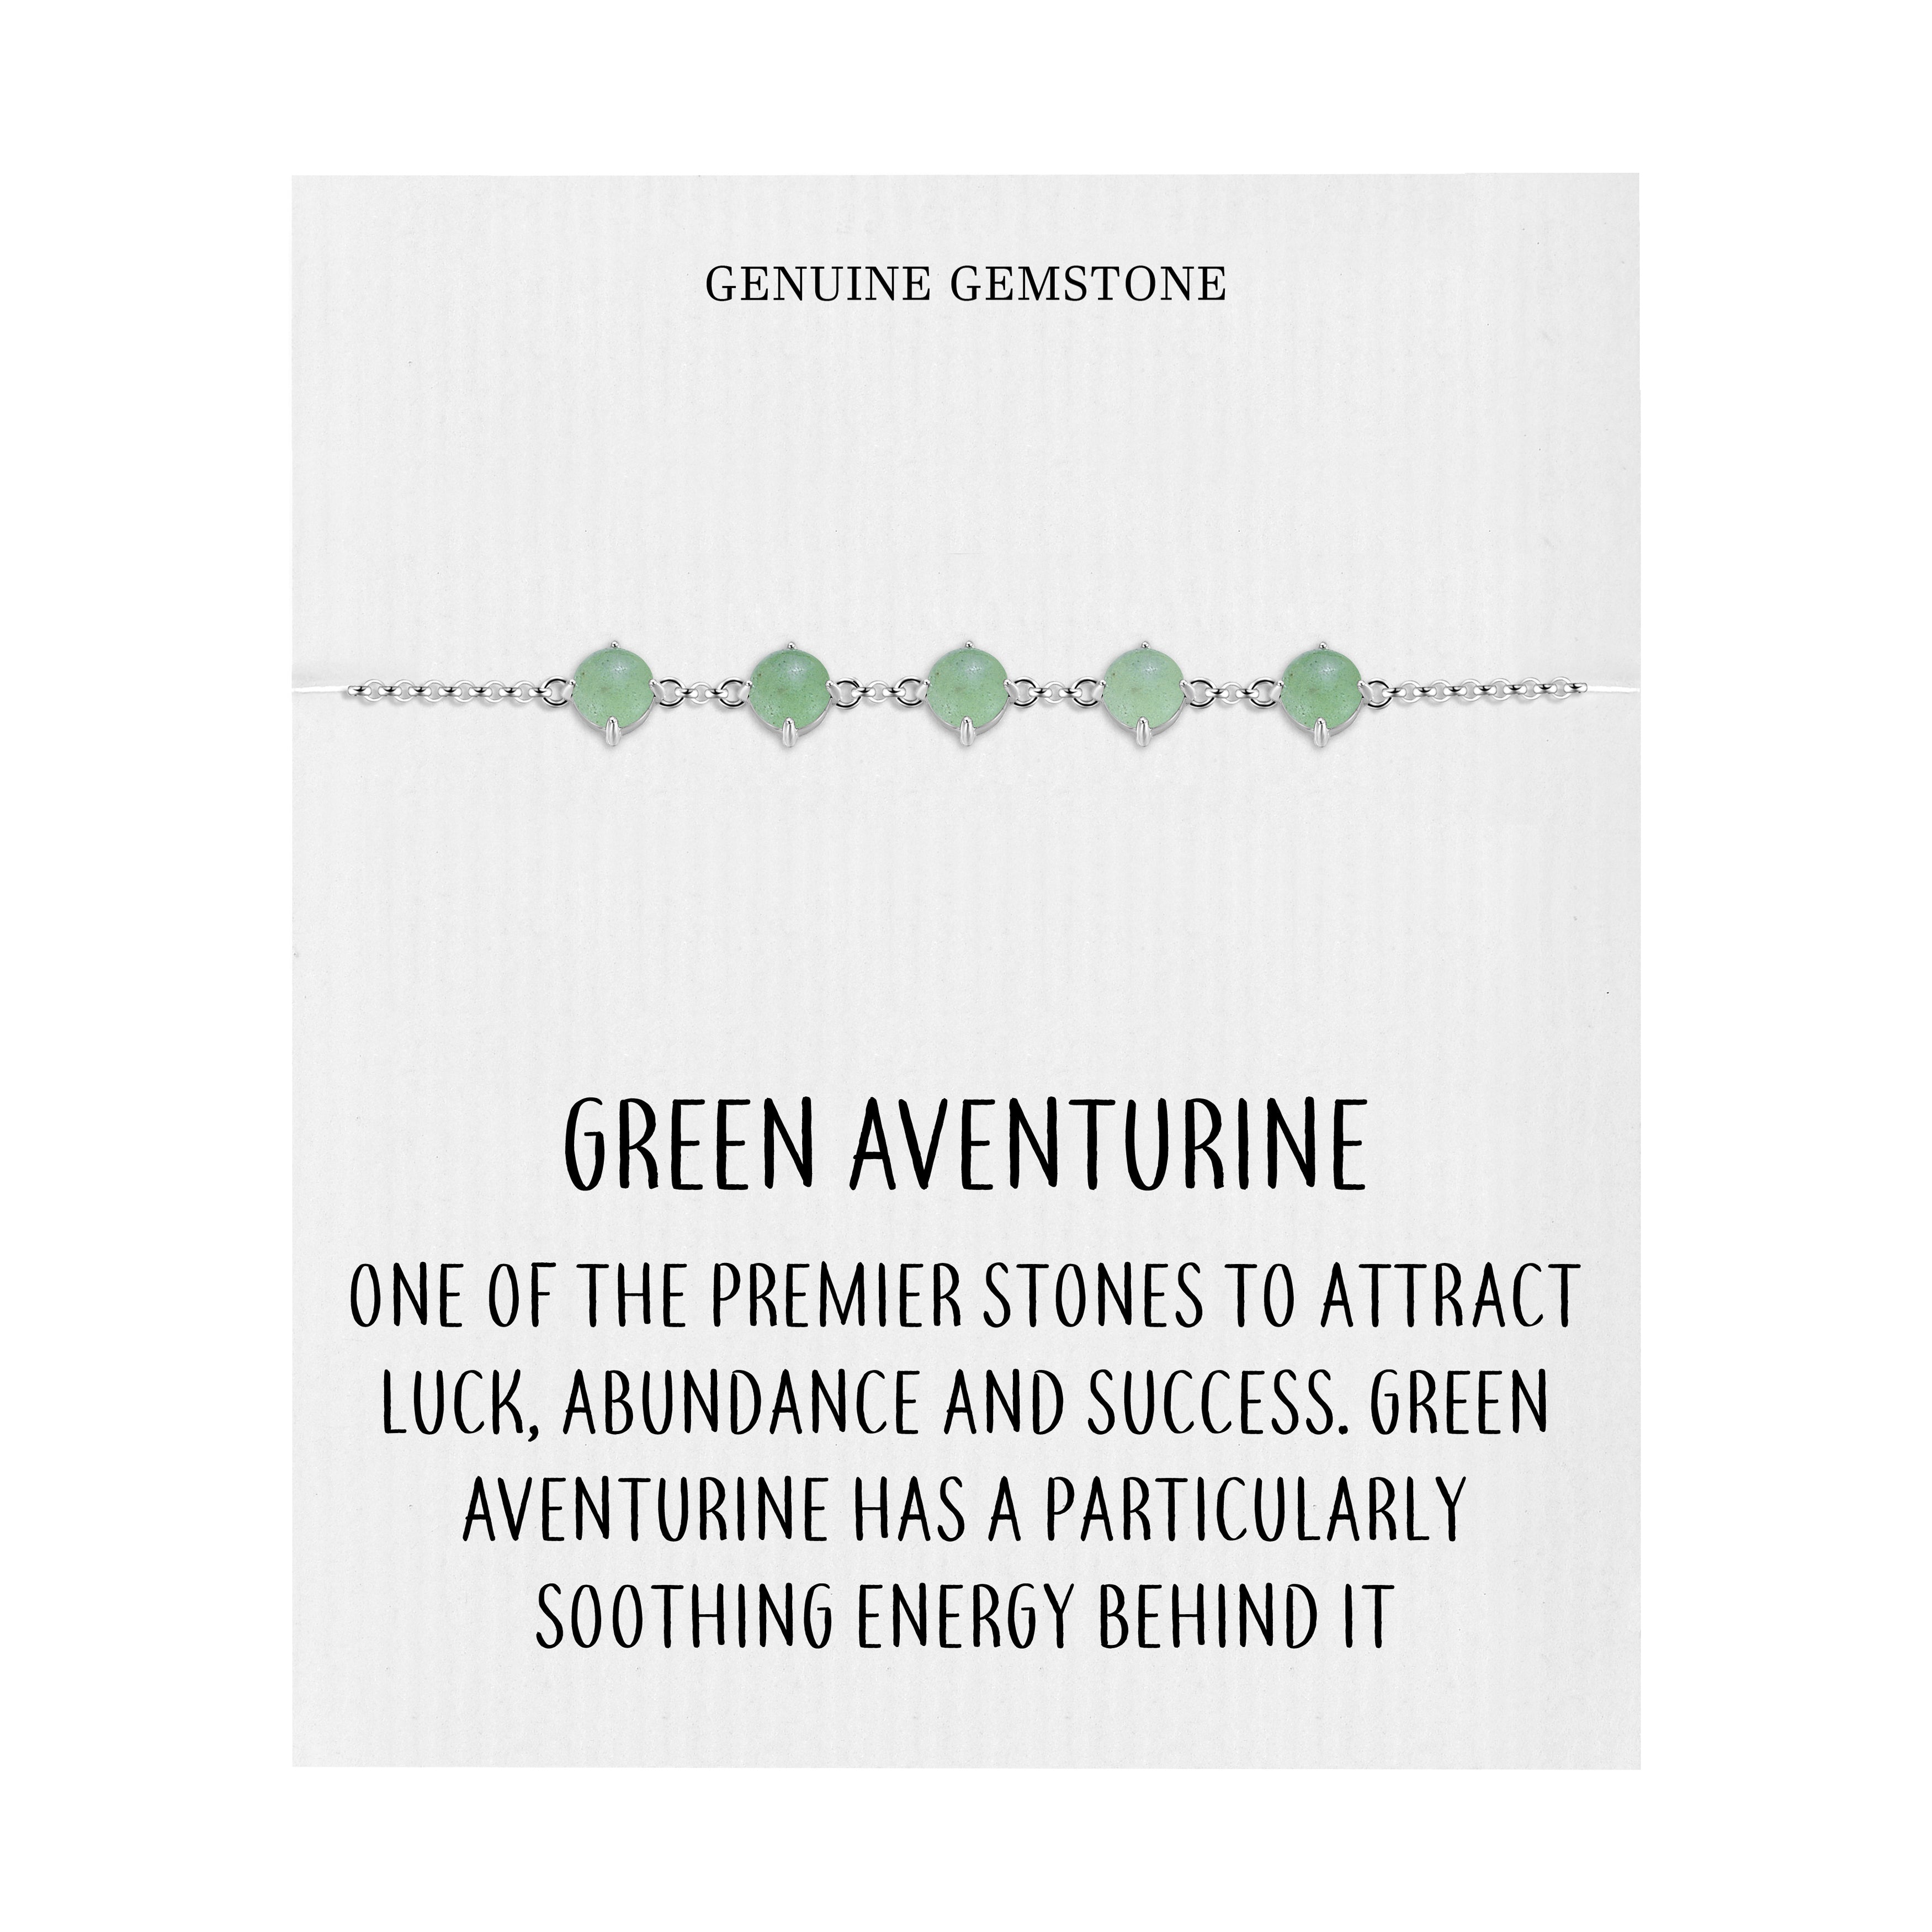 Green Aventurine Gemstone Bracelet with Quote Card by Philip Jones Jewellery